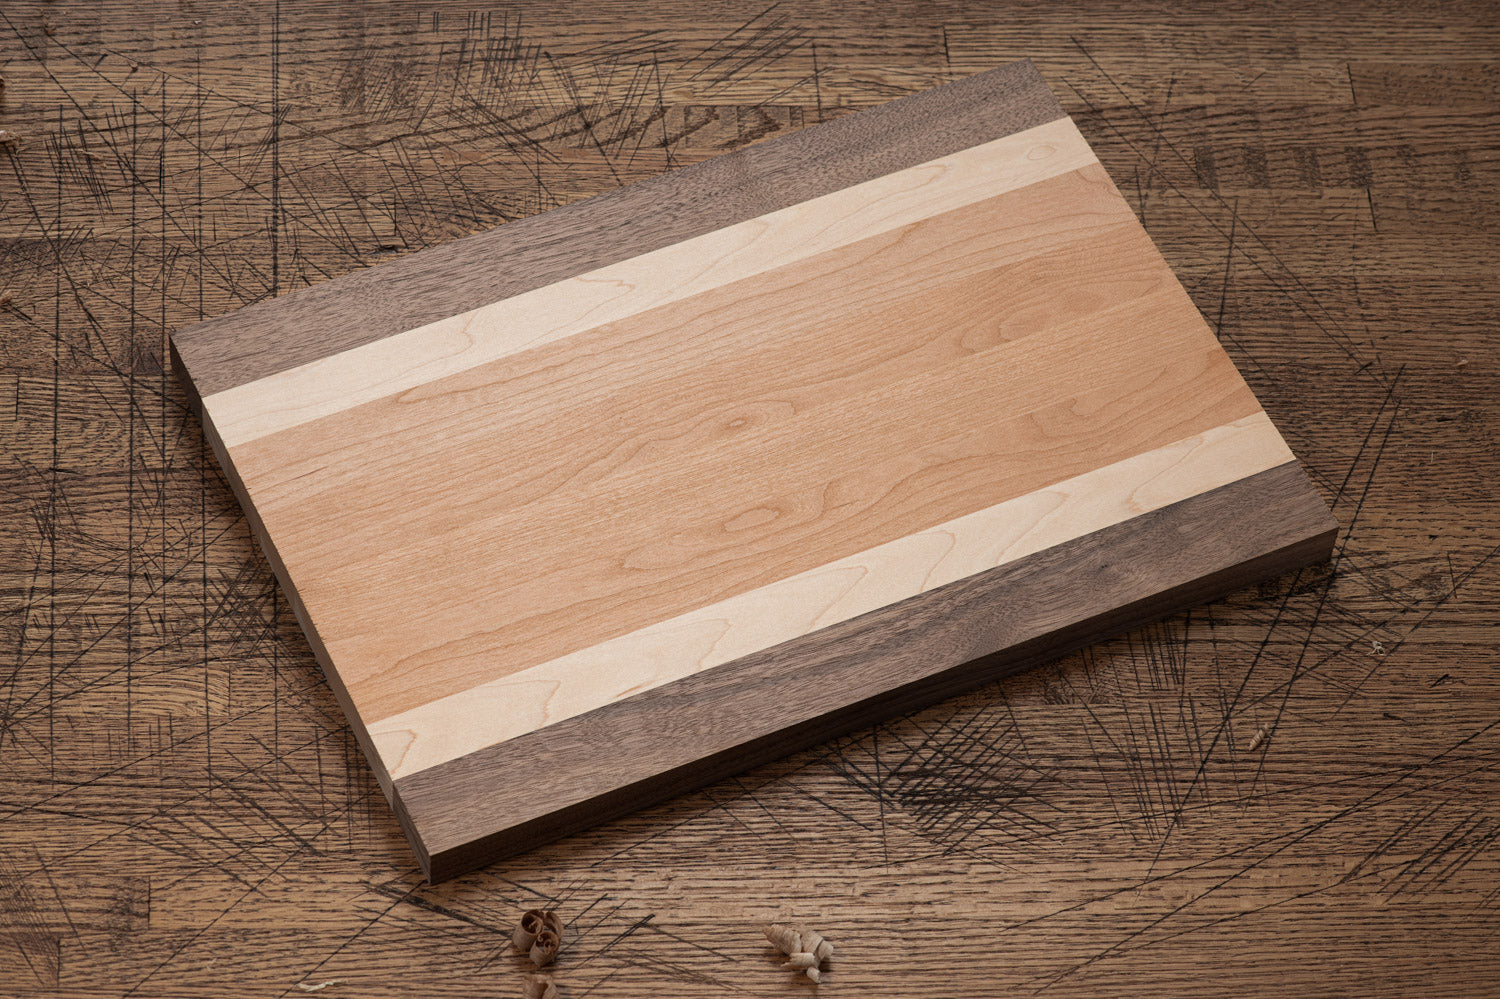 Hardwood Cherry Cutting Board - Fuji – North Castle Hardwoods